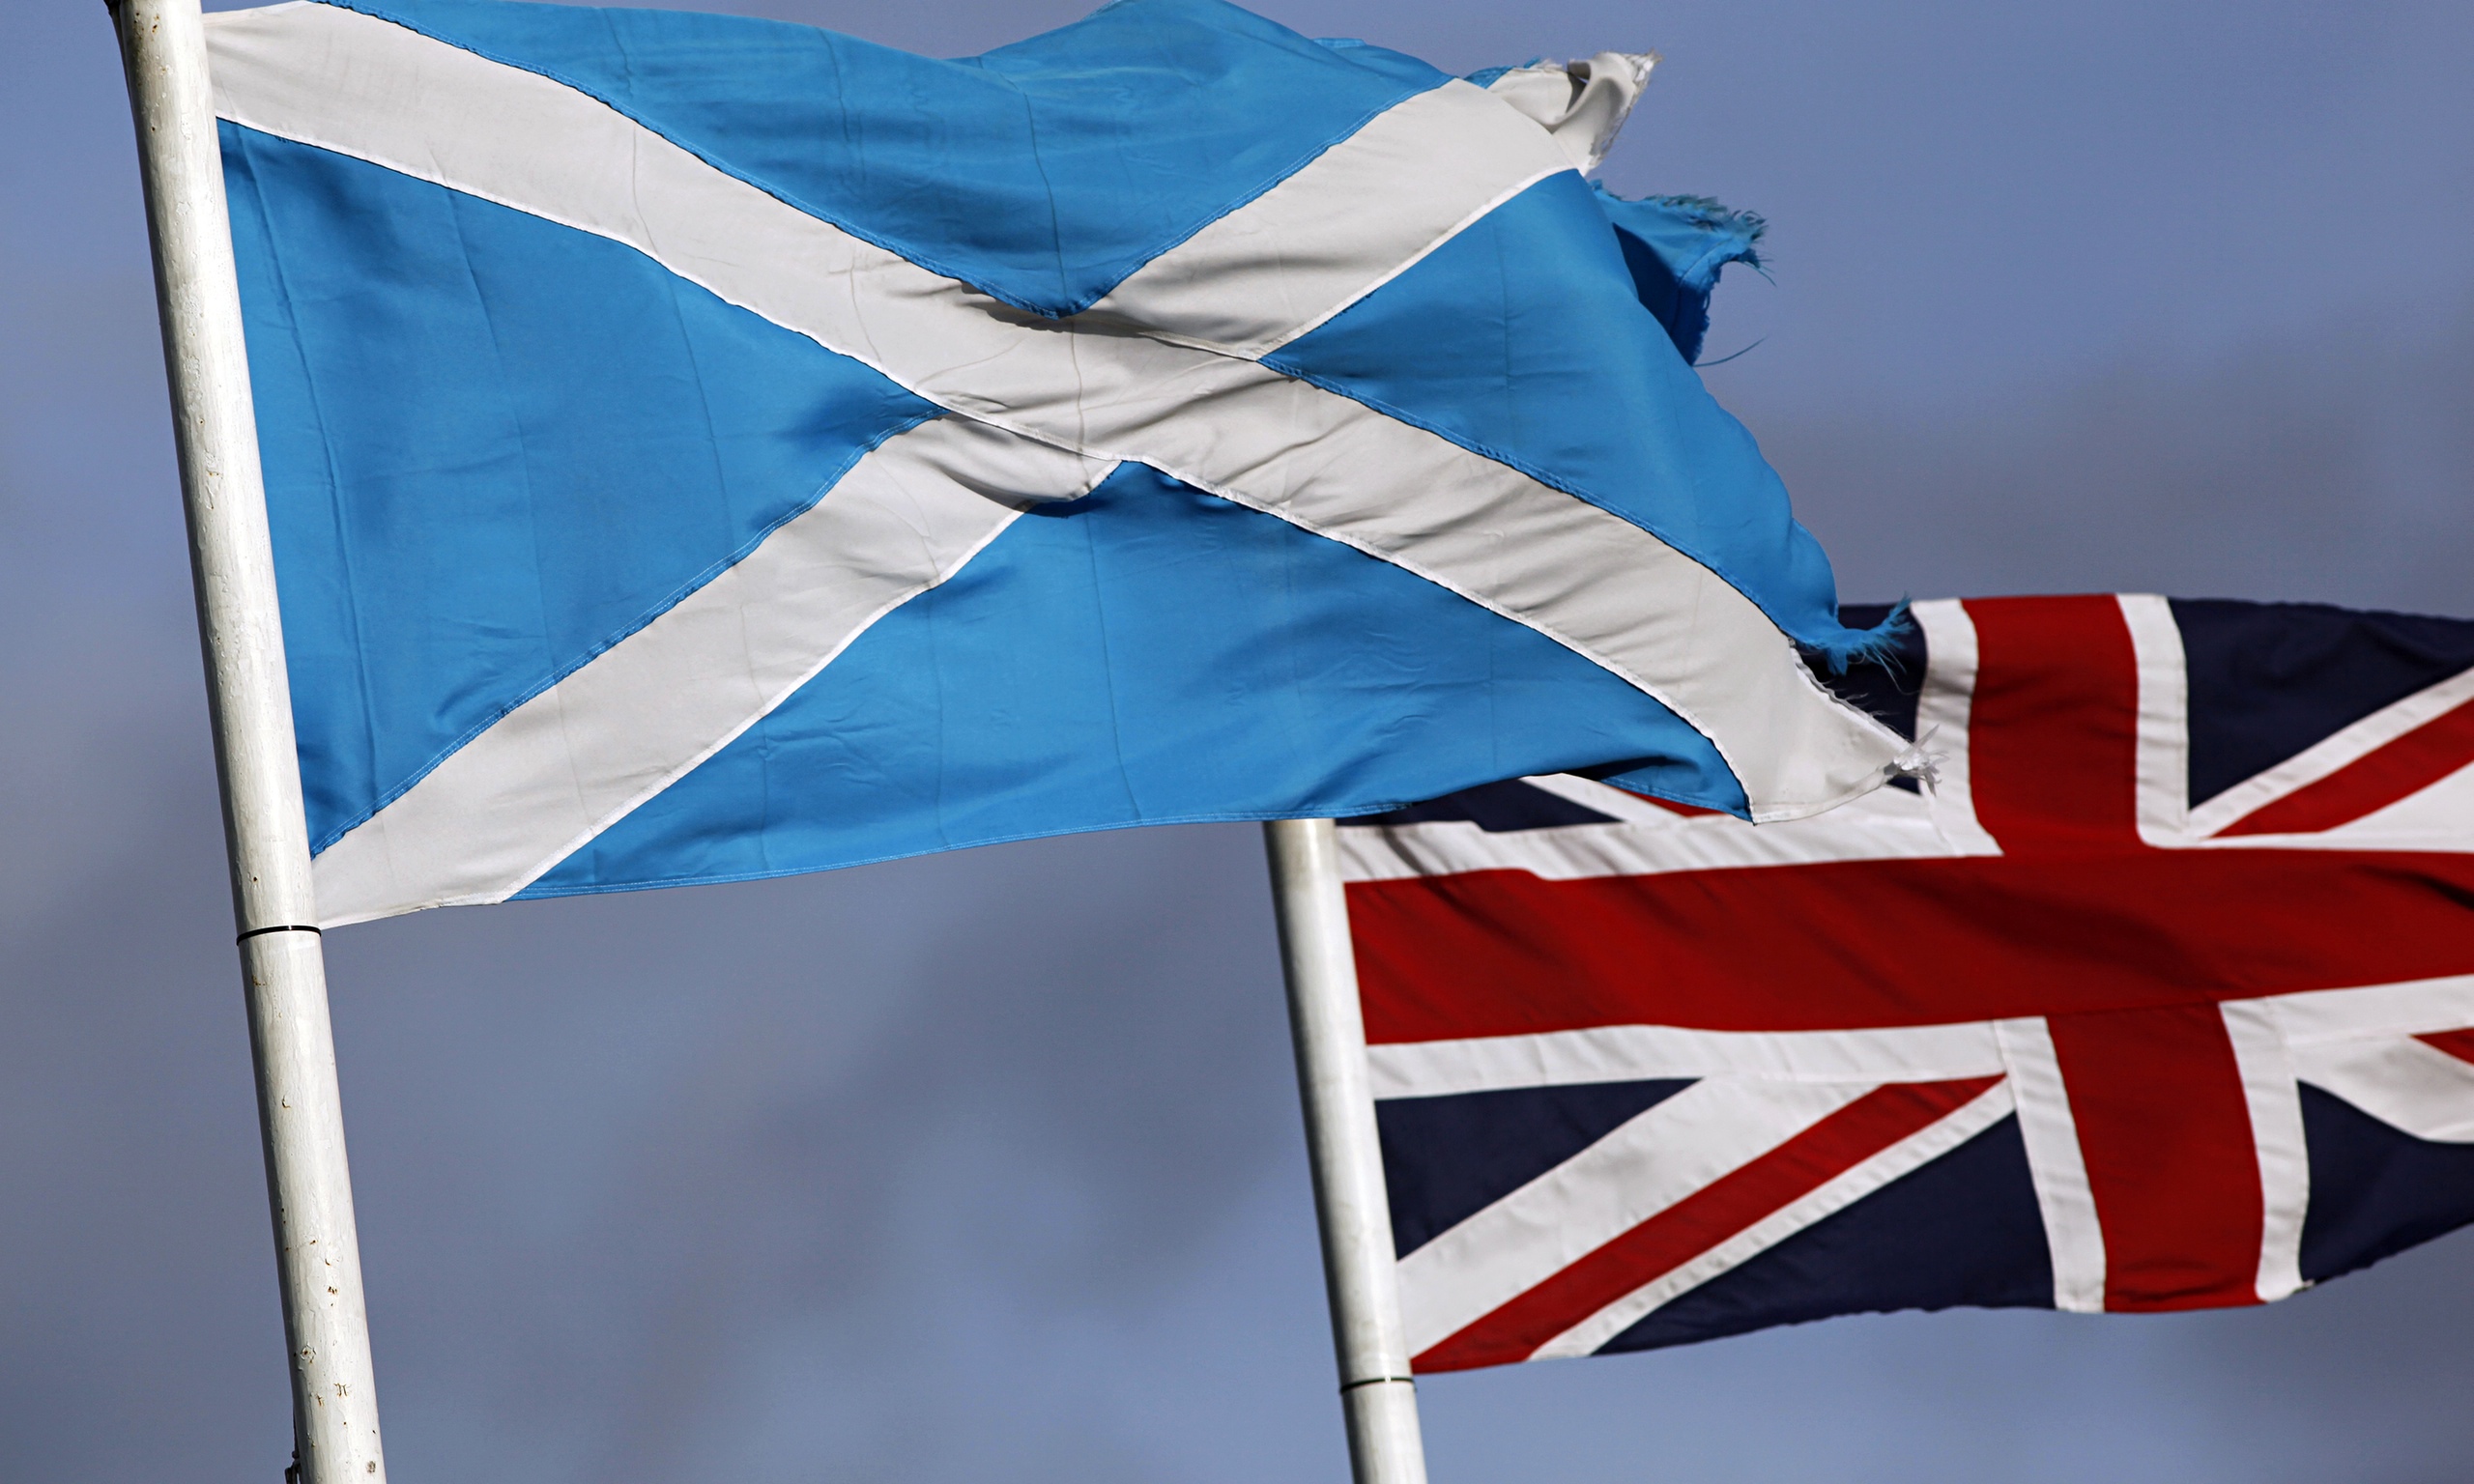 Флаг Шотландии и Великобритании. Британия Скотланд флаг. Великобритания Шотландия. Объединение Великобритании и Шотландии. Independent country